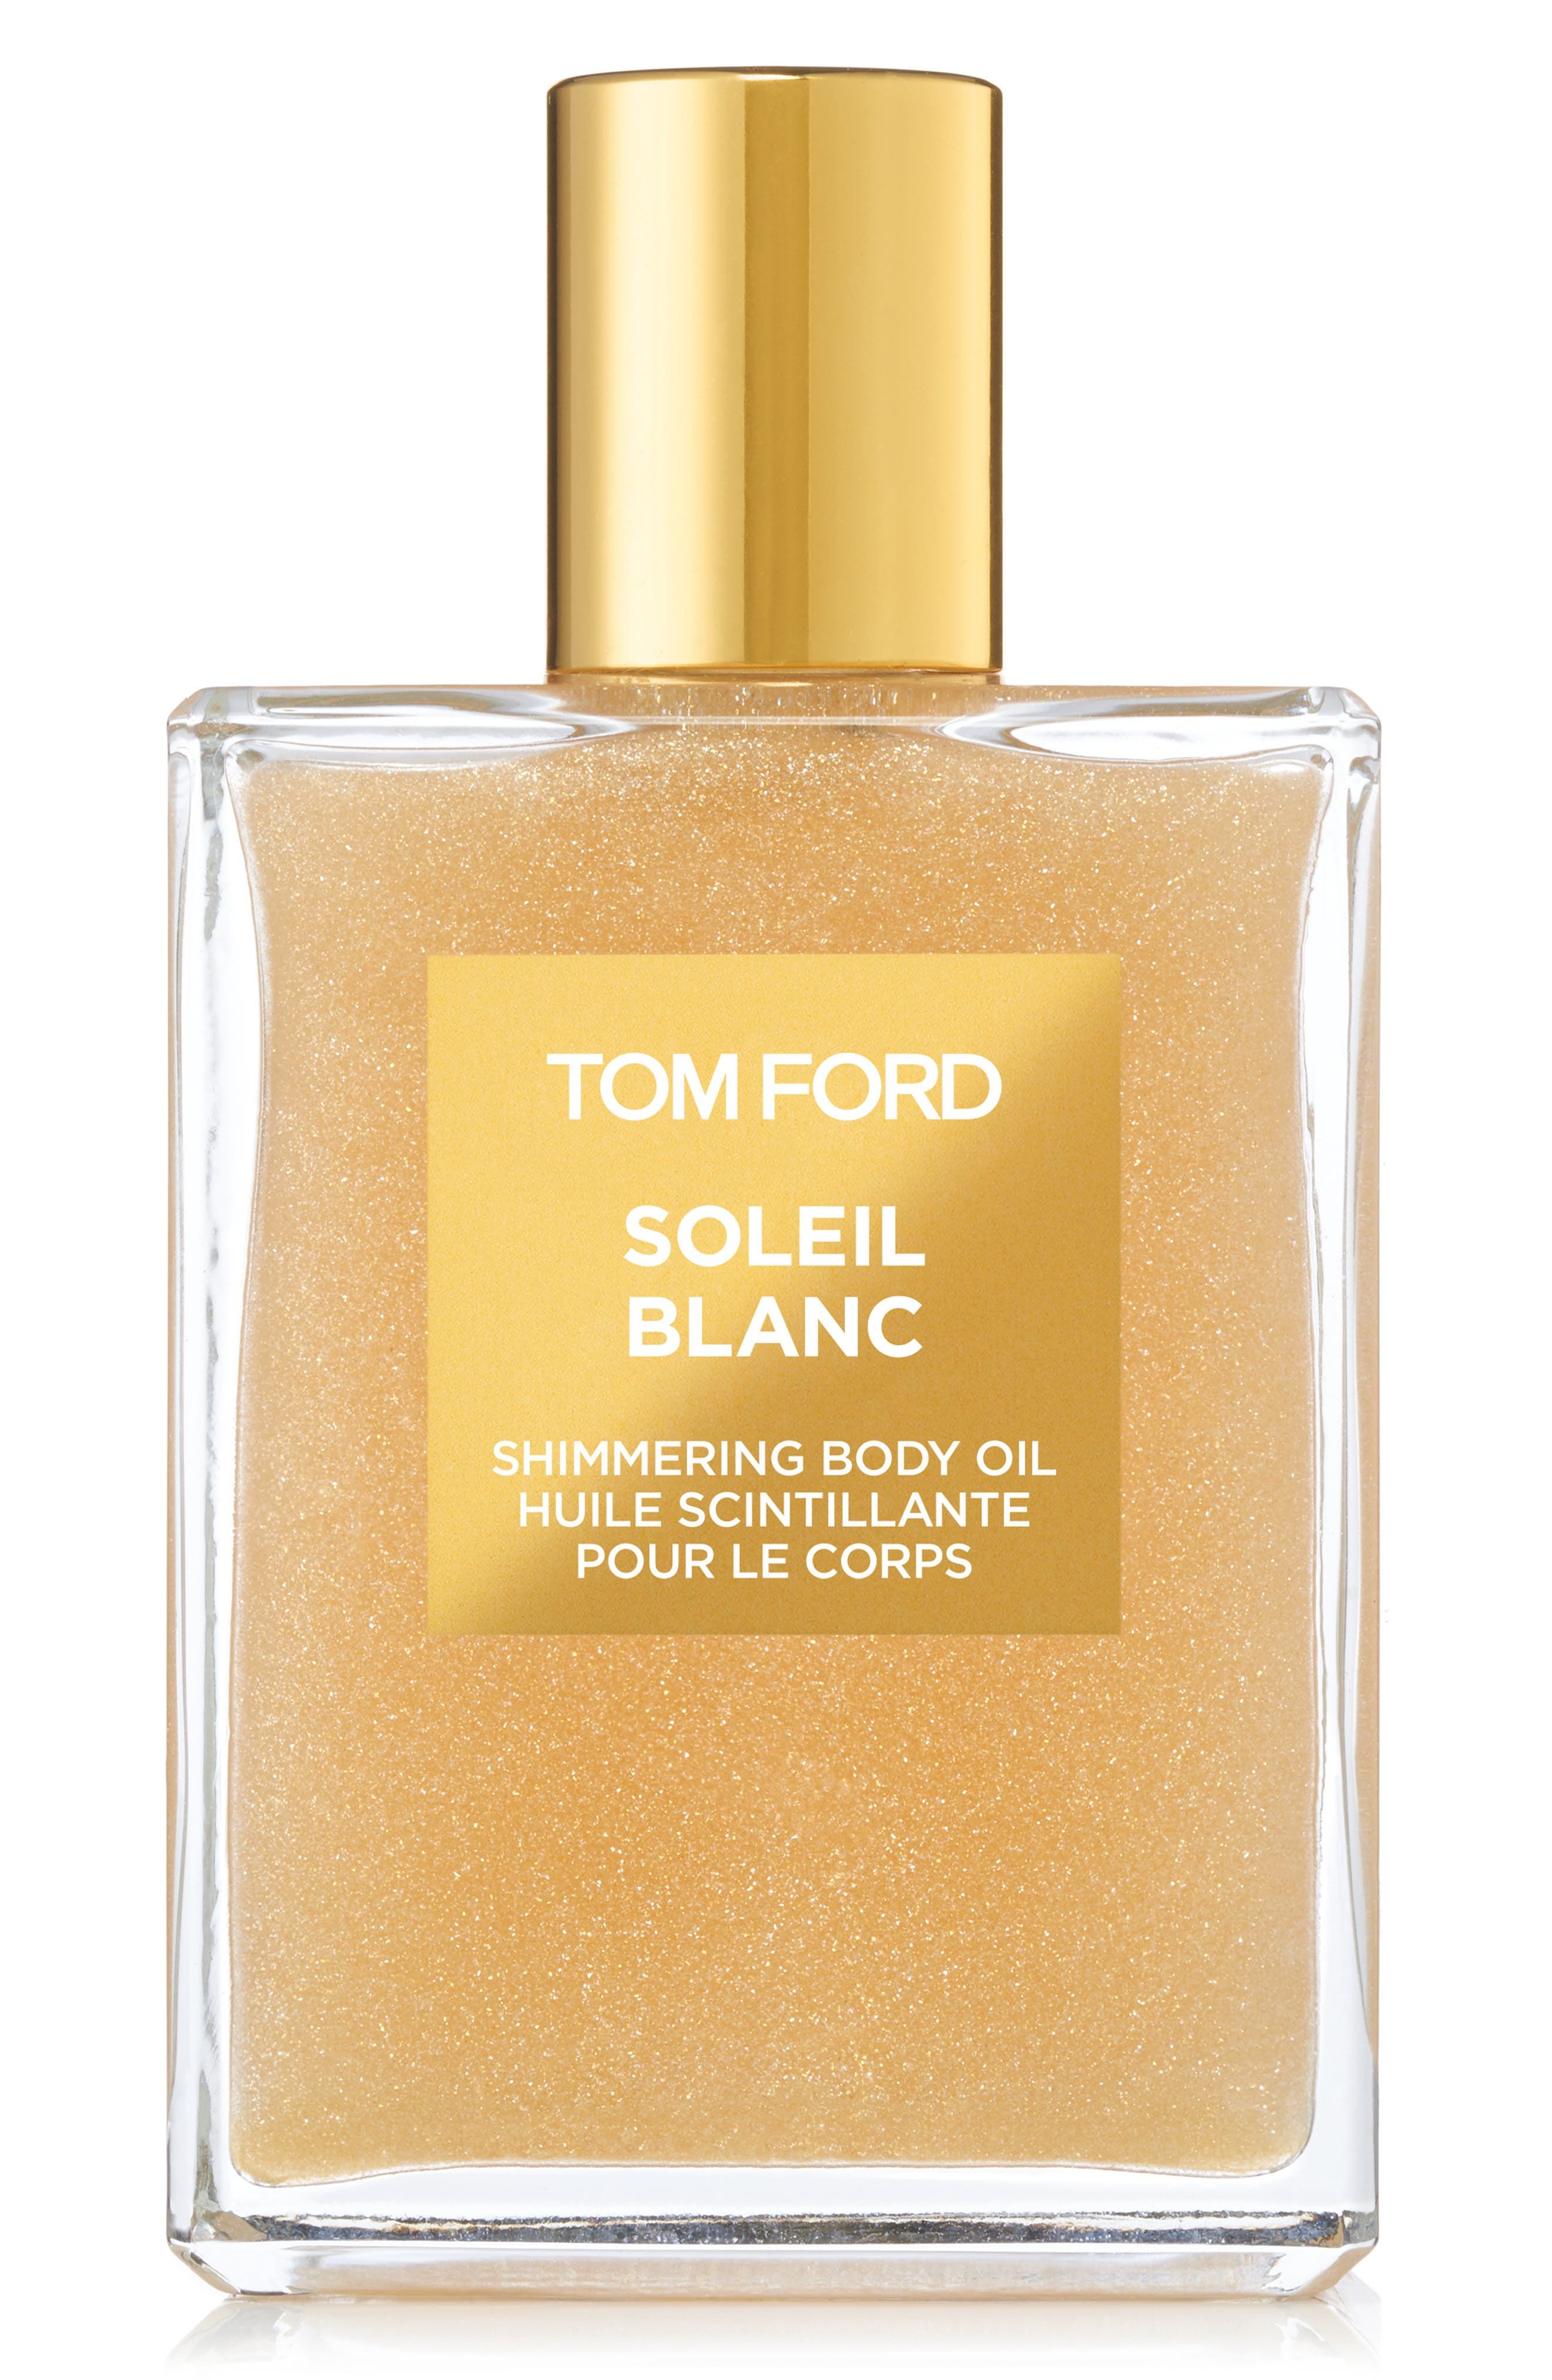 Soleil Blanc Shimmering Body Oil in Gold